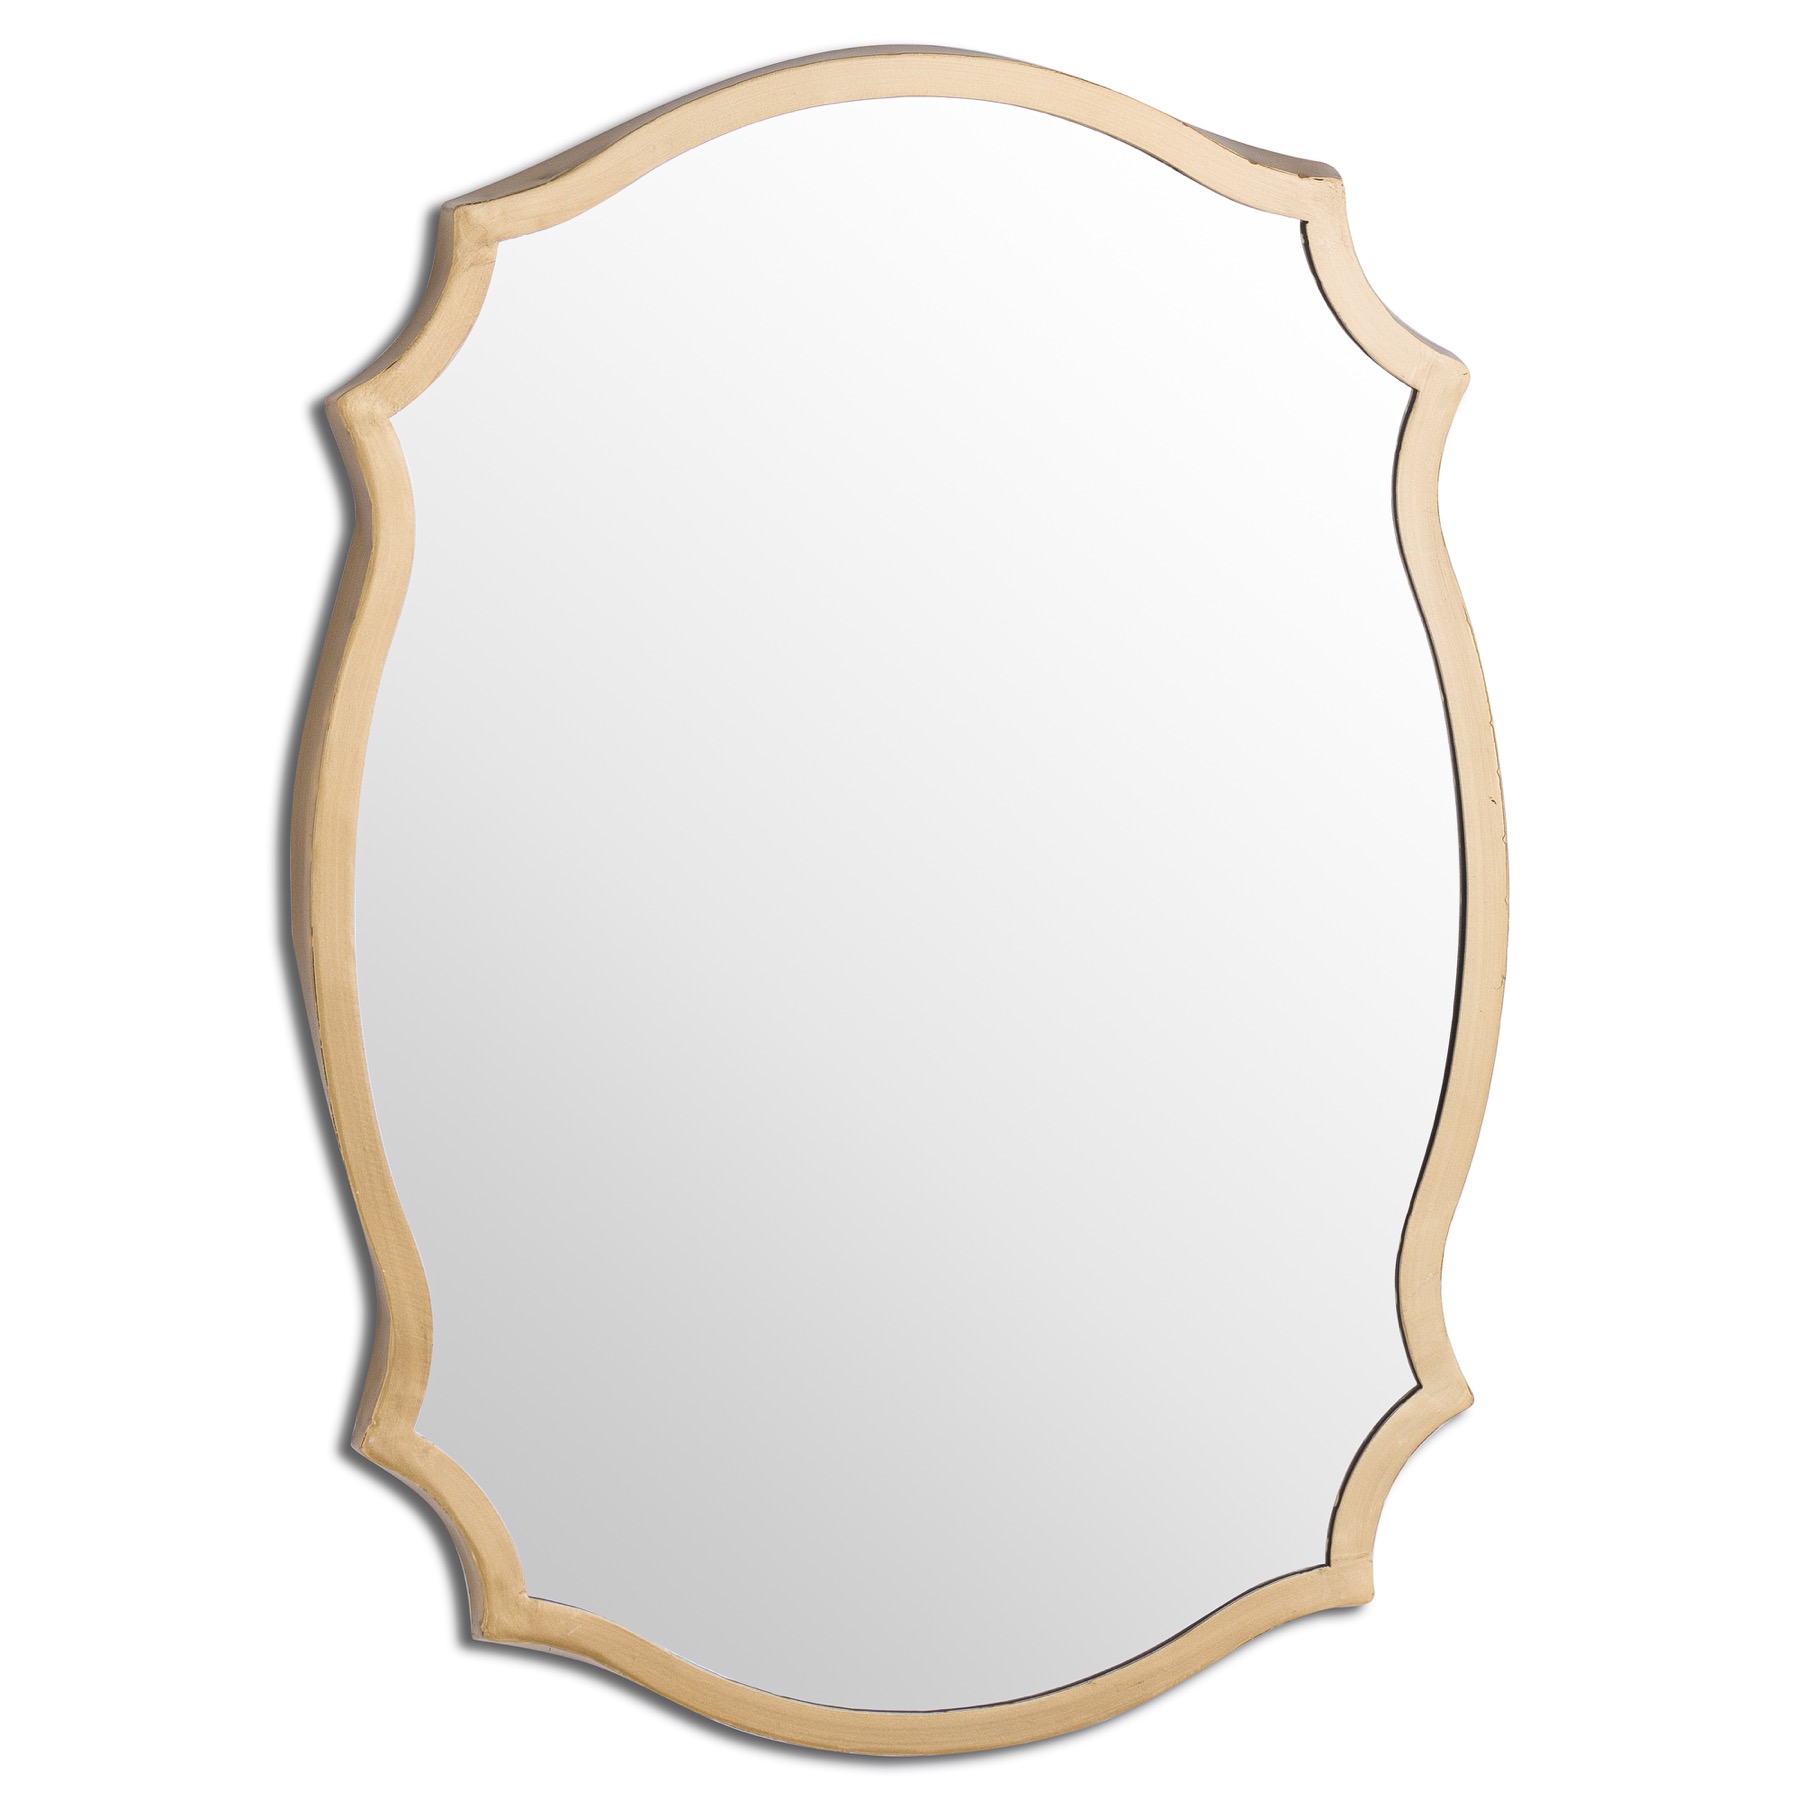 Antique Bronze Ornate Curved Mirror - Image 1